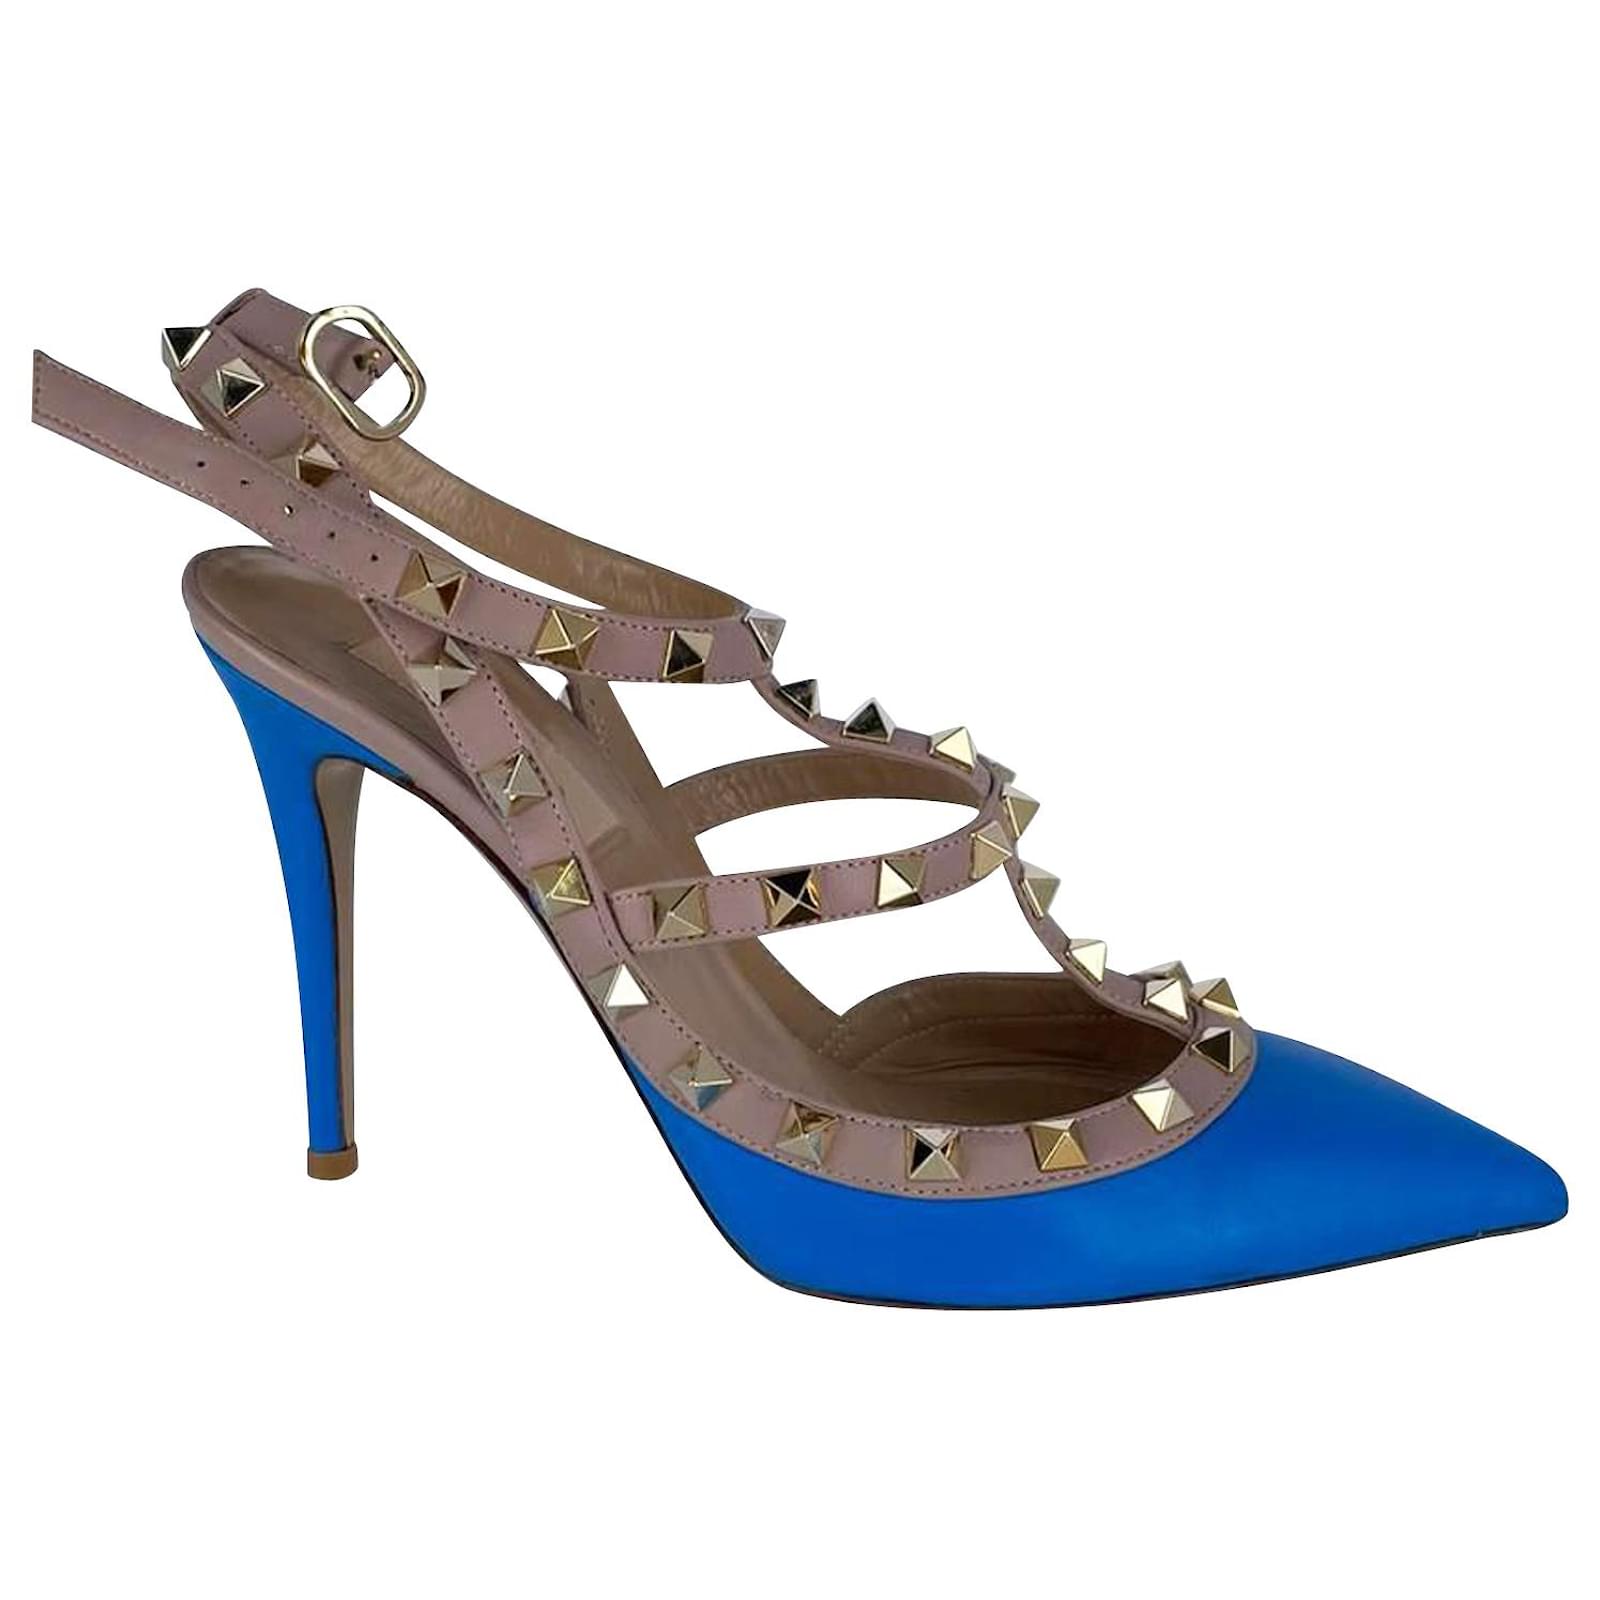 Priscilla I'Anson - Work Look. VALENTINO 'Rockstud' heels. 48 Hours... News  Photo - Getty Images